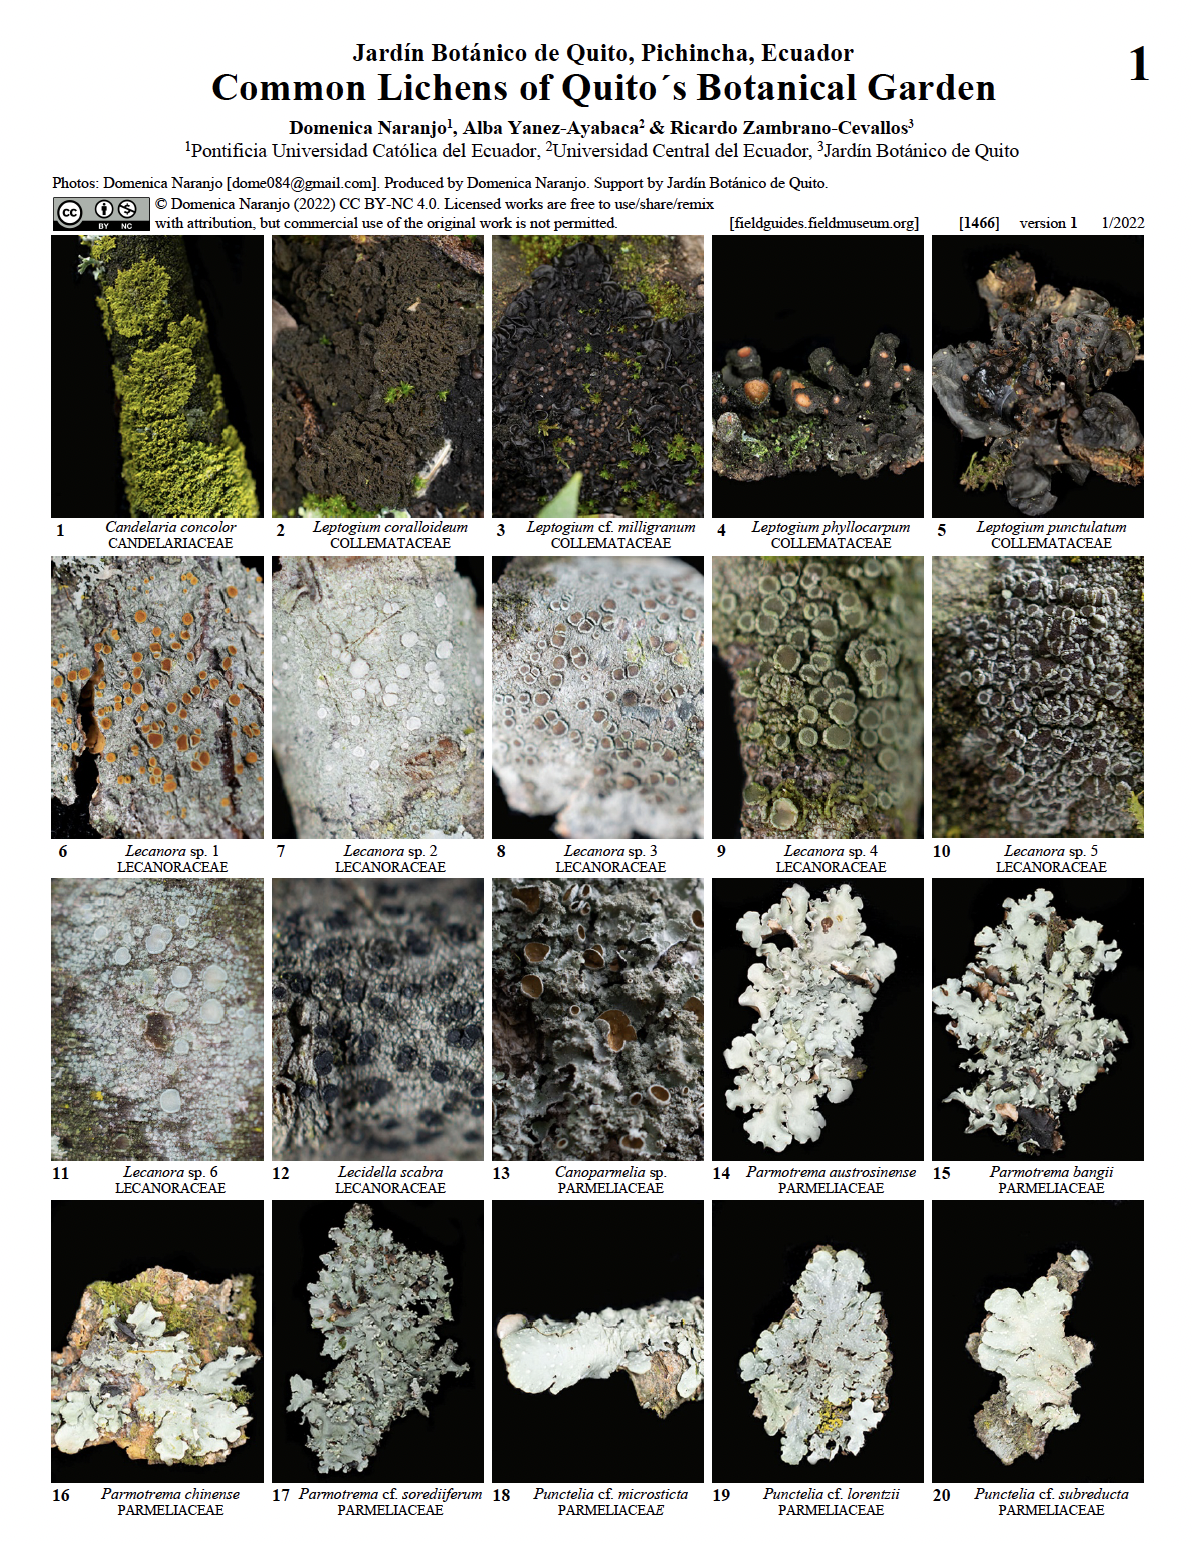 1466_ecuador_lichensbotanicalgarden_quito.pdf 